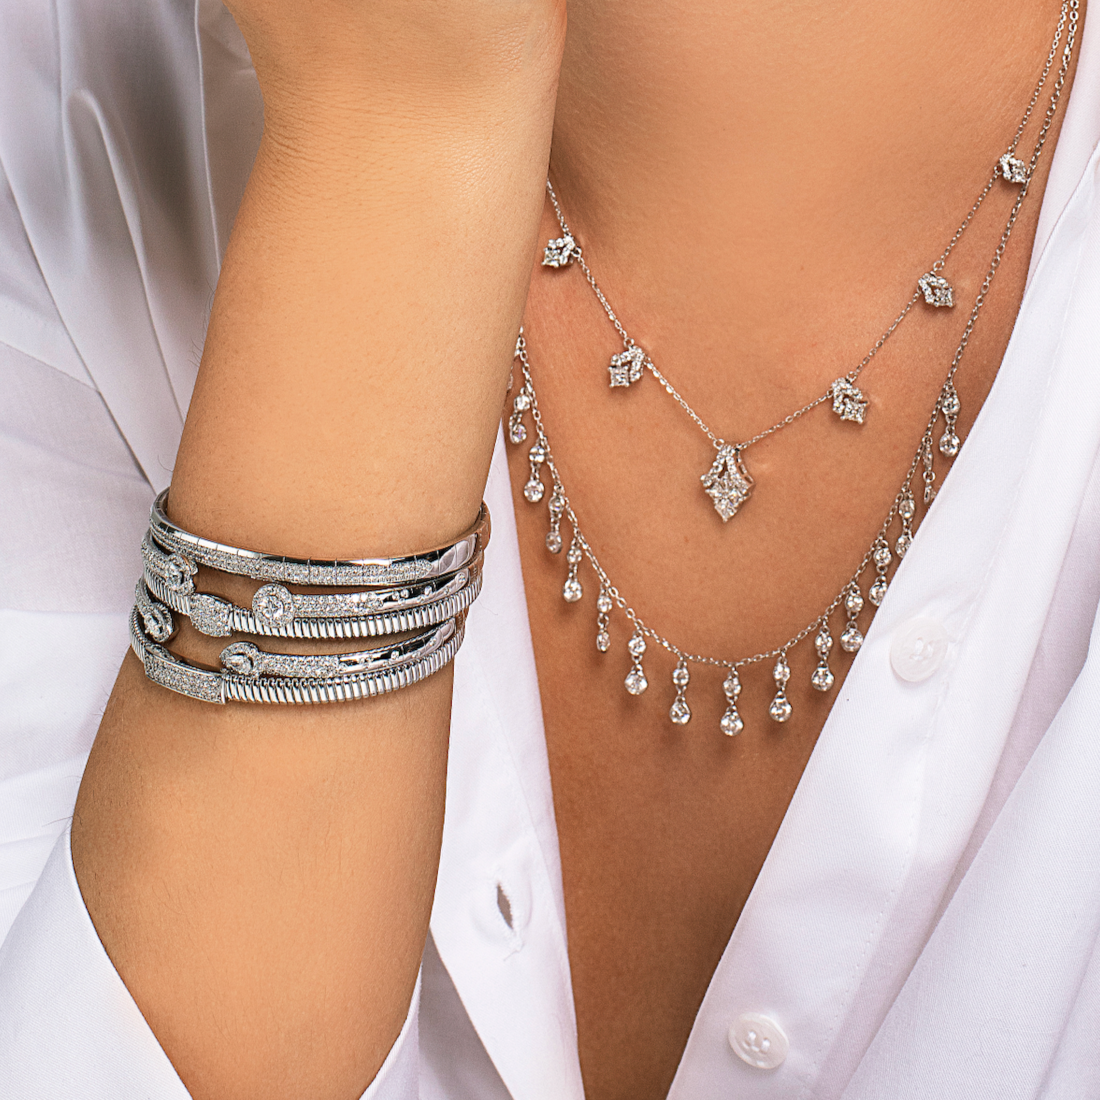 Diamond Linear Cuff Bracelet